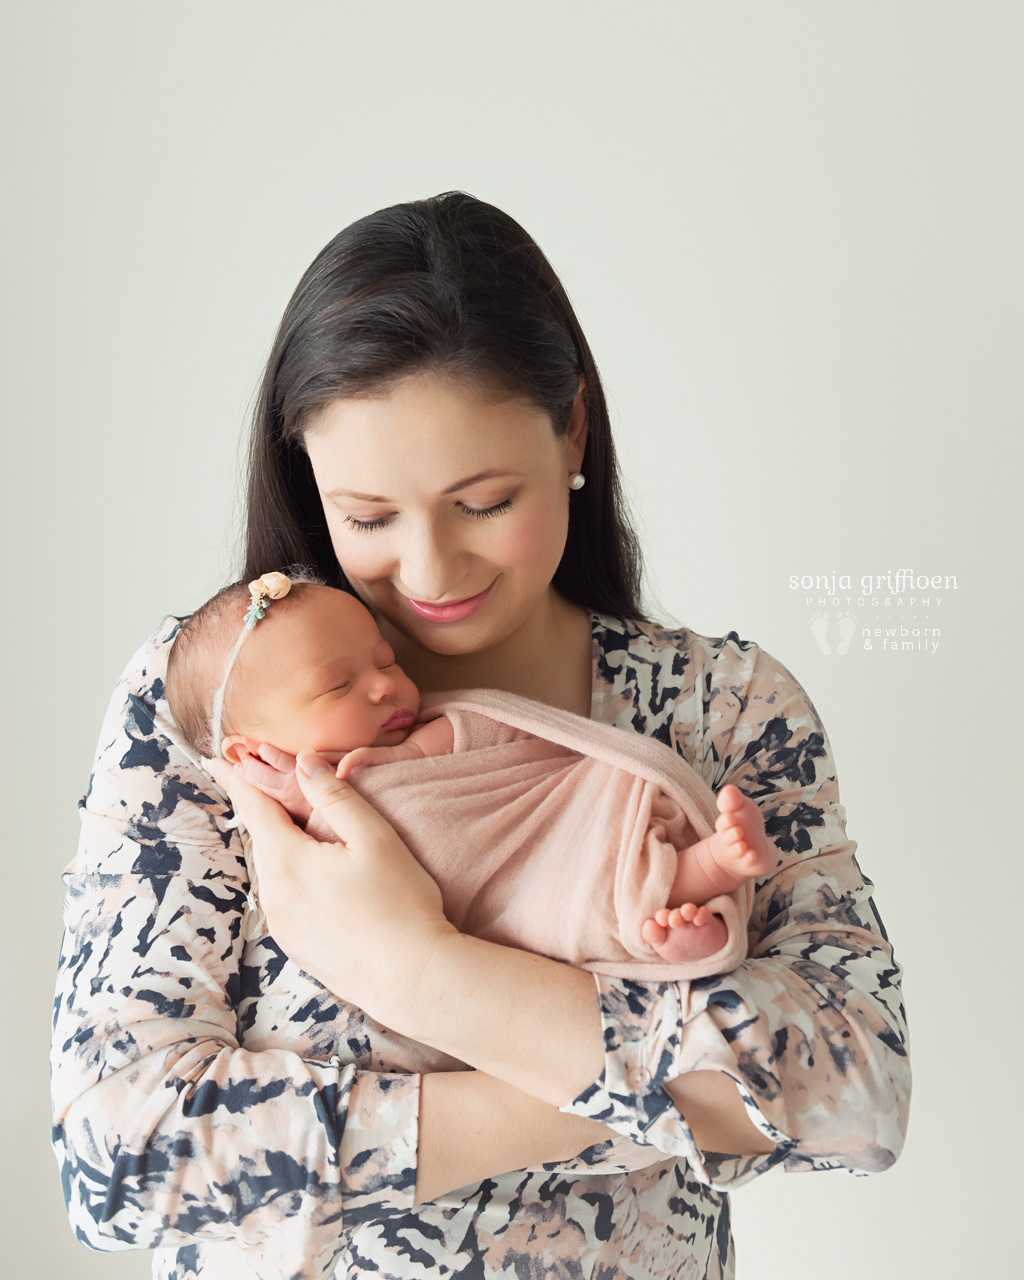 Chloe-Newborn-Brisbane-Newborn-Photographer-Sonja-Griffioen-01.jpg